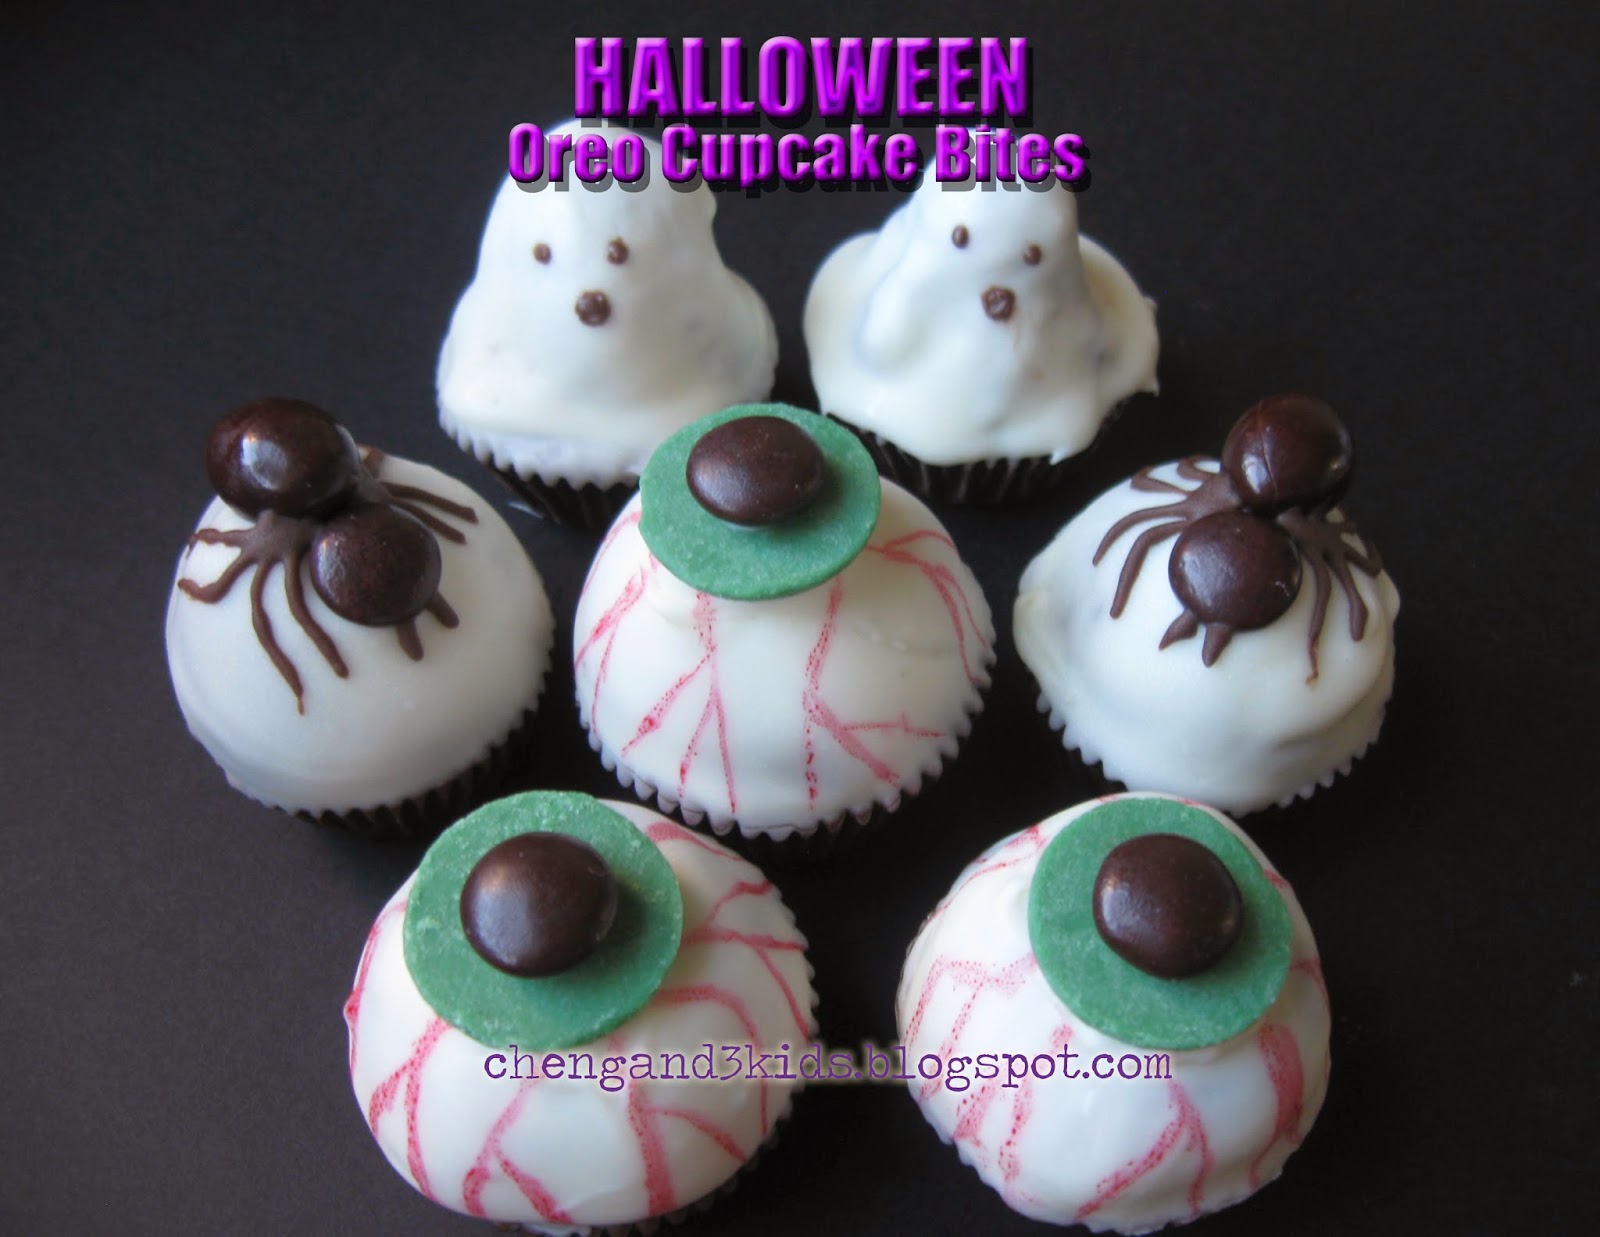 halloween cupcakes for kids  these halloween oreo cupcake bites with you i call them oreo cupcake